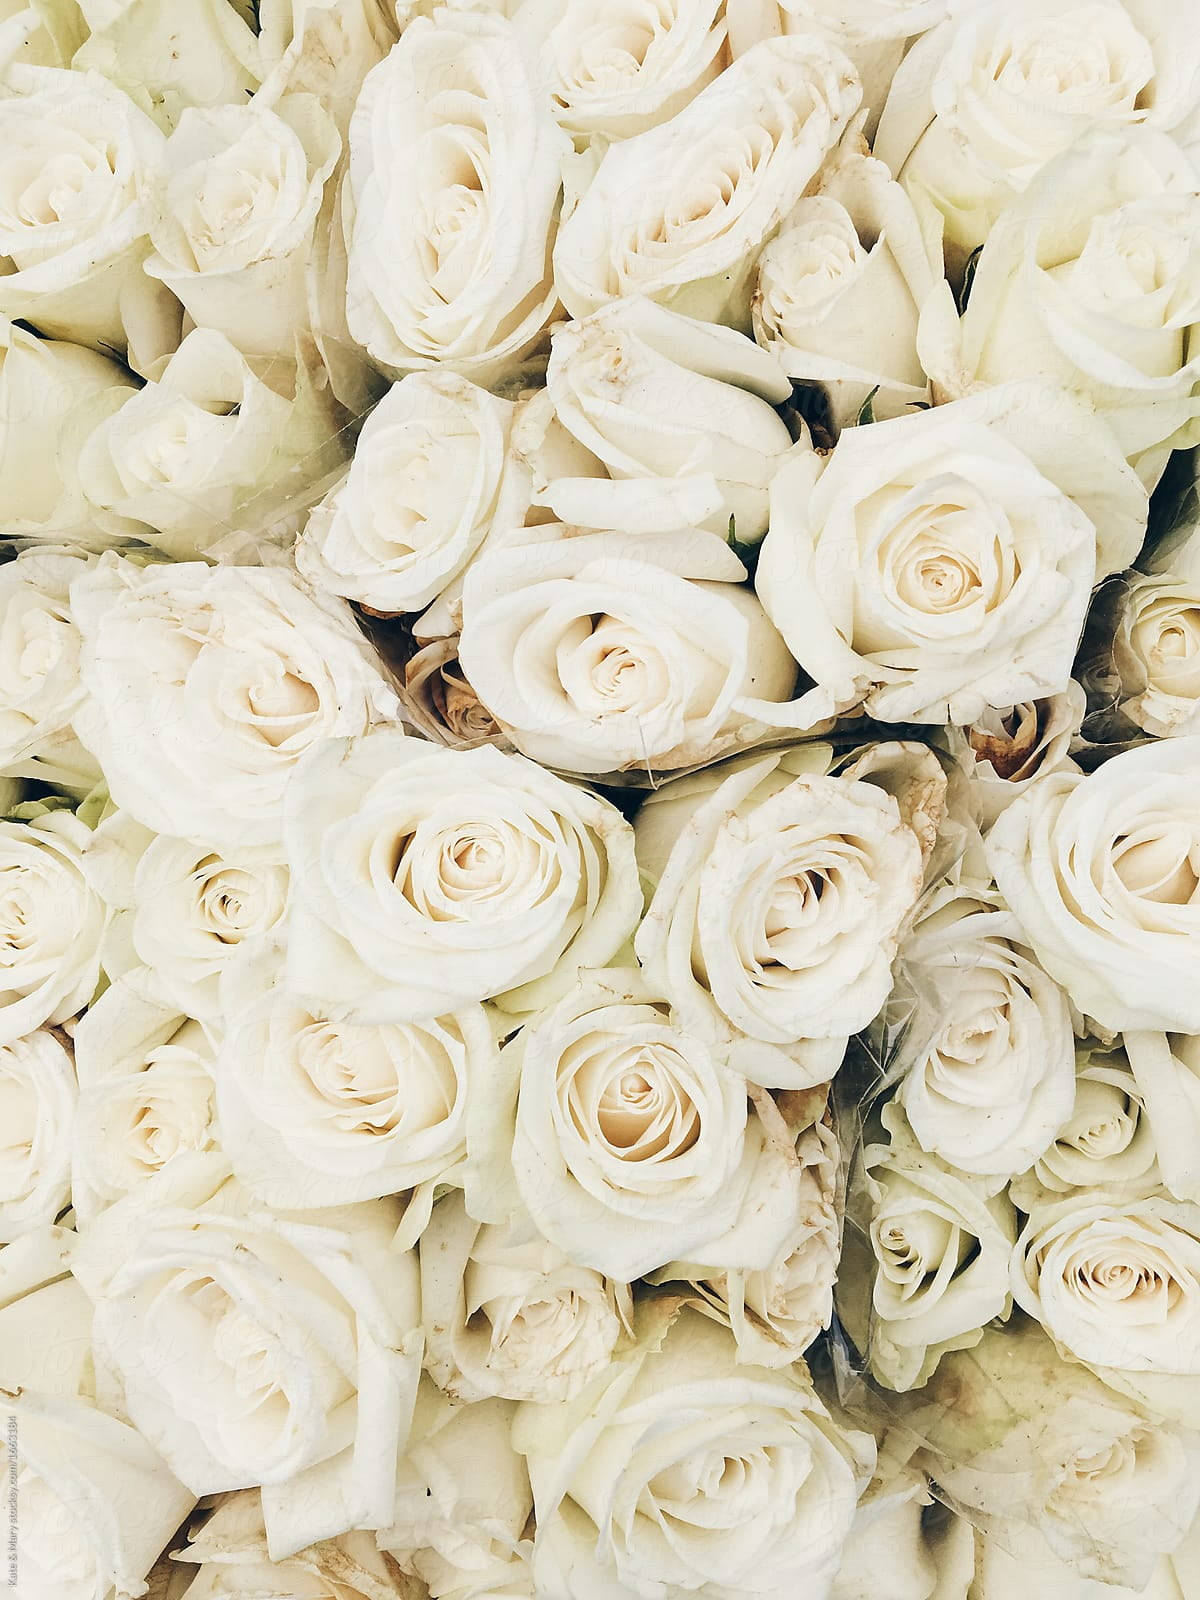 Cool White Roses Closeup